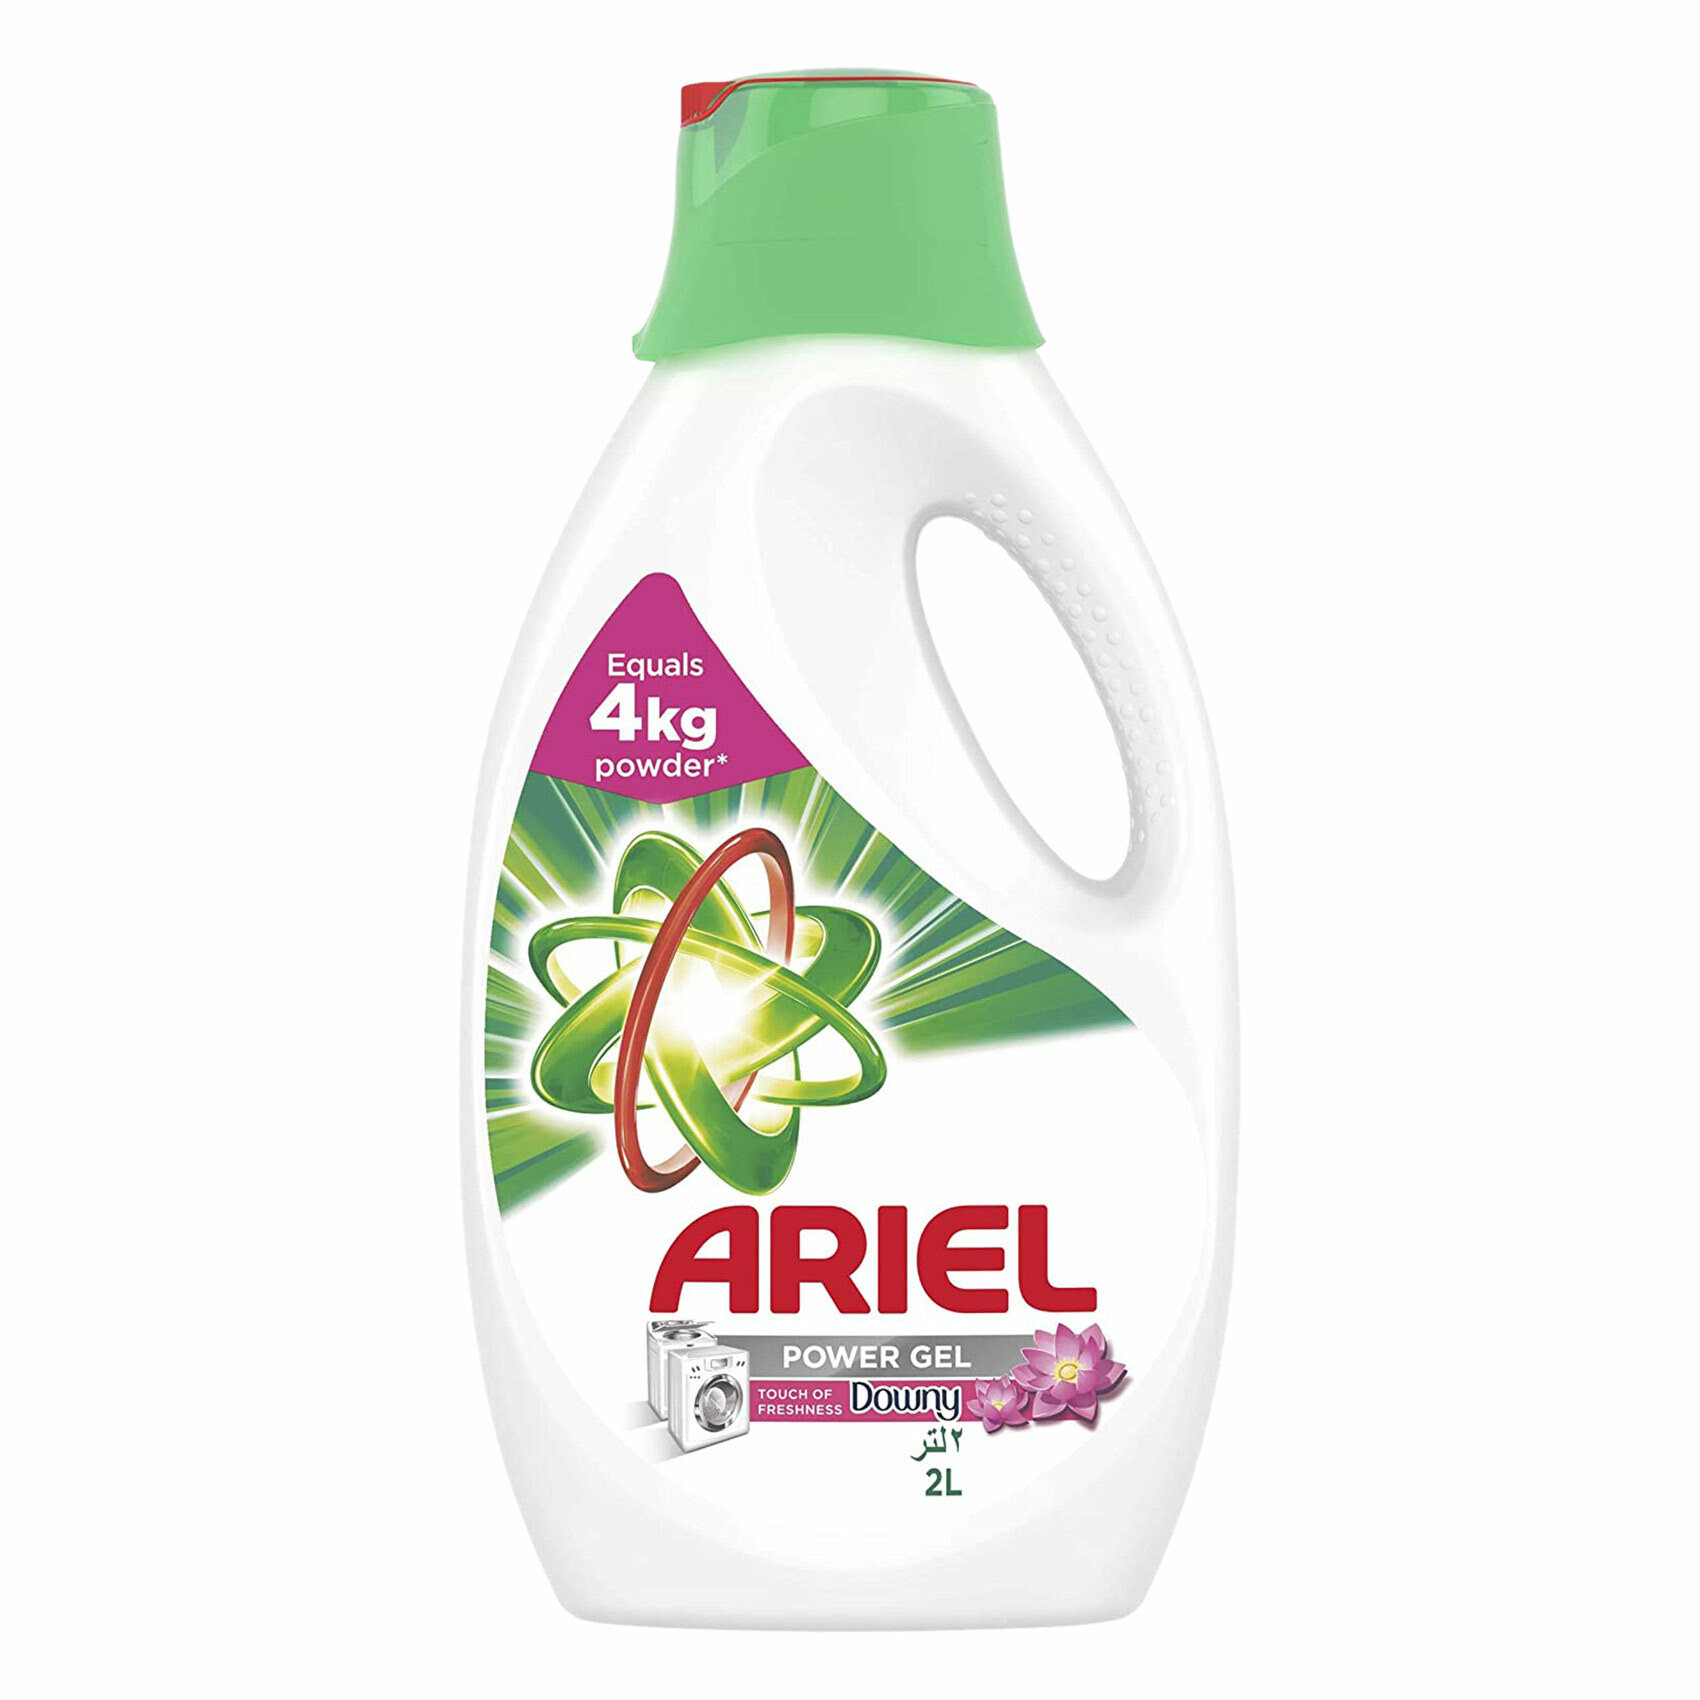 Ariel Downy Power Gel Laundry Detergent 2L